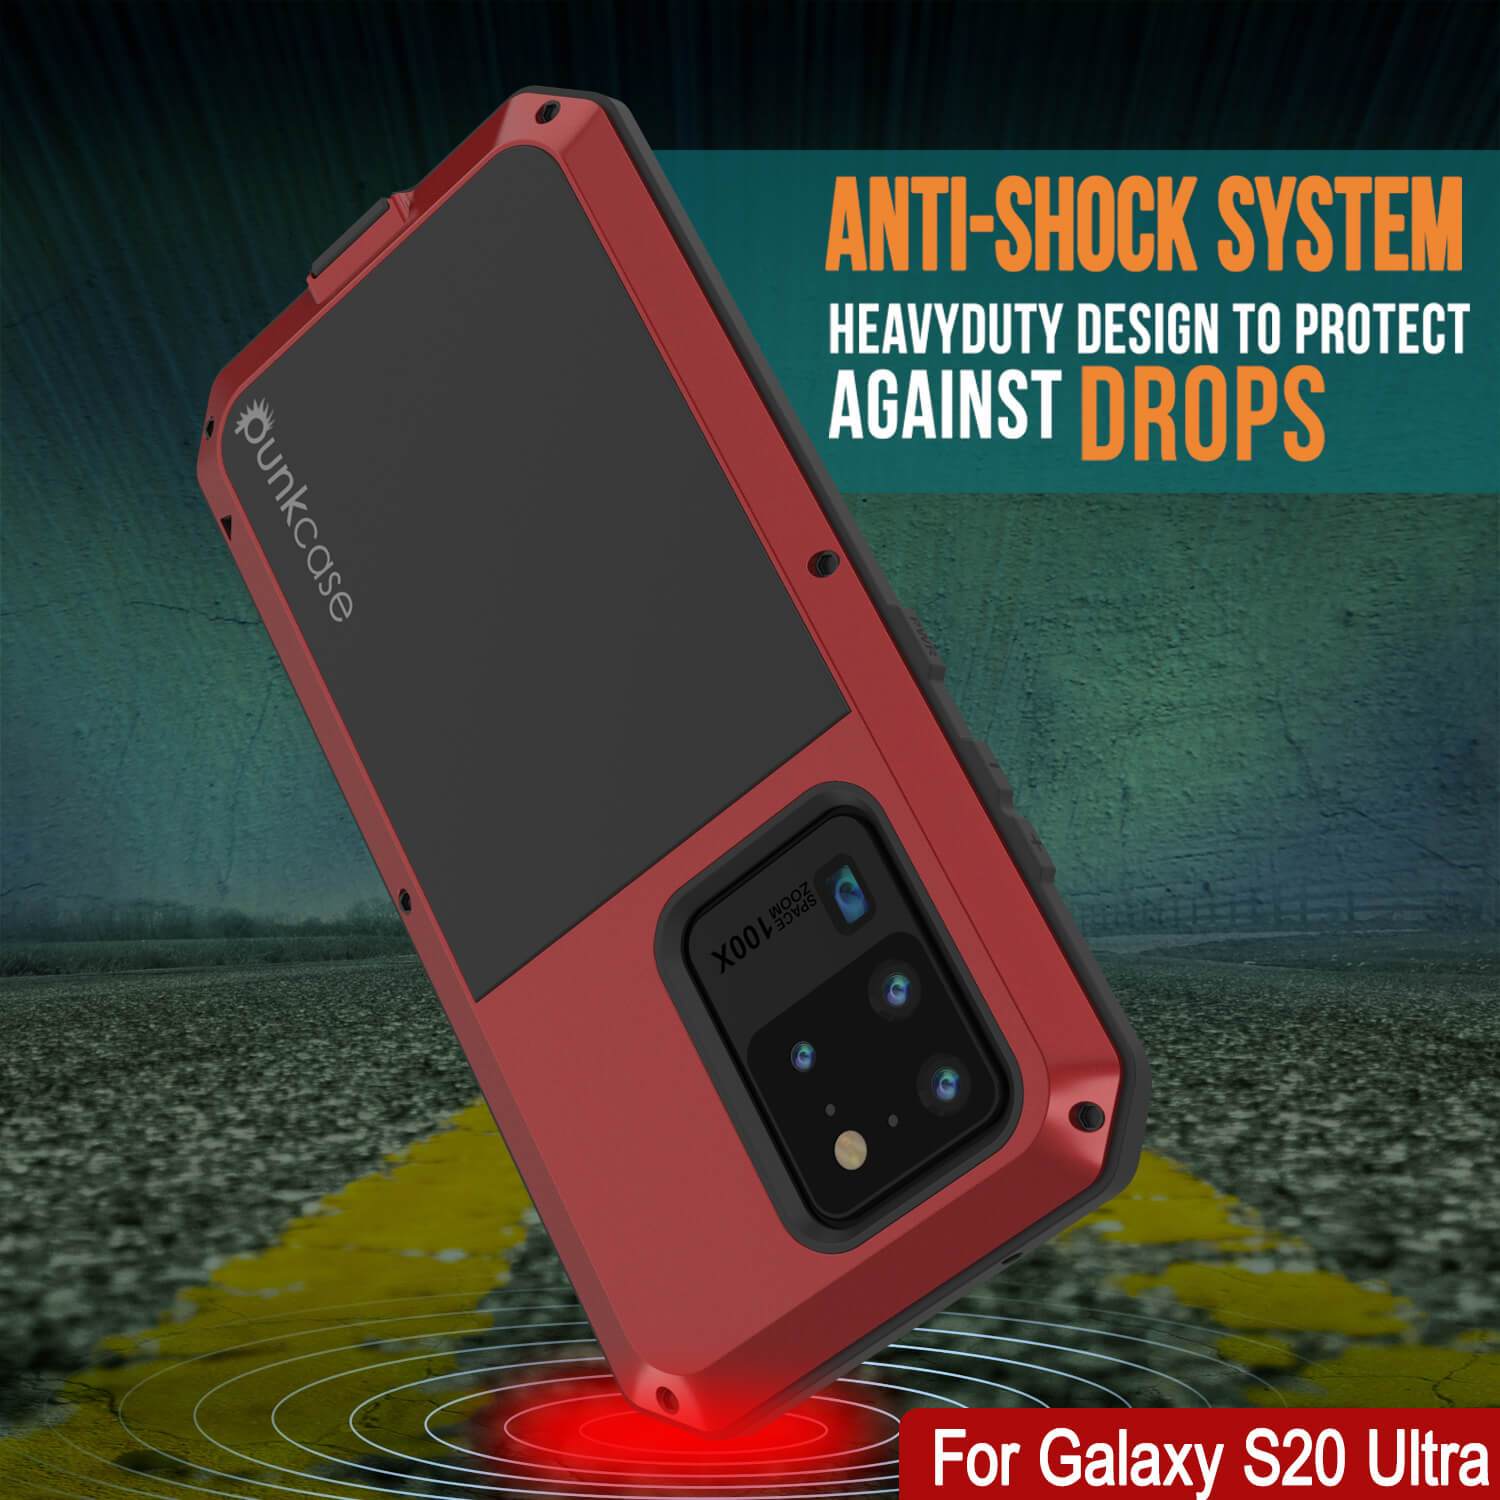 Samsung Galaxy S20 Ultra Case - Full Body Protection Heavy Duty